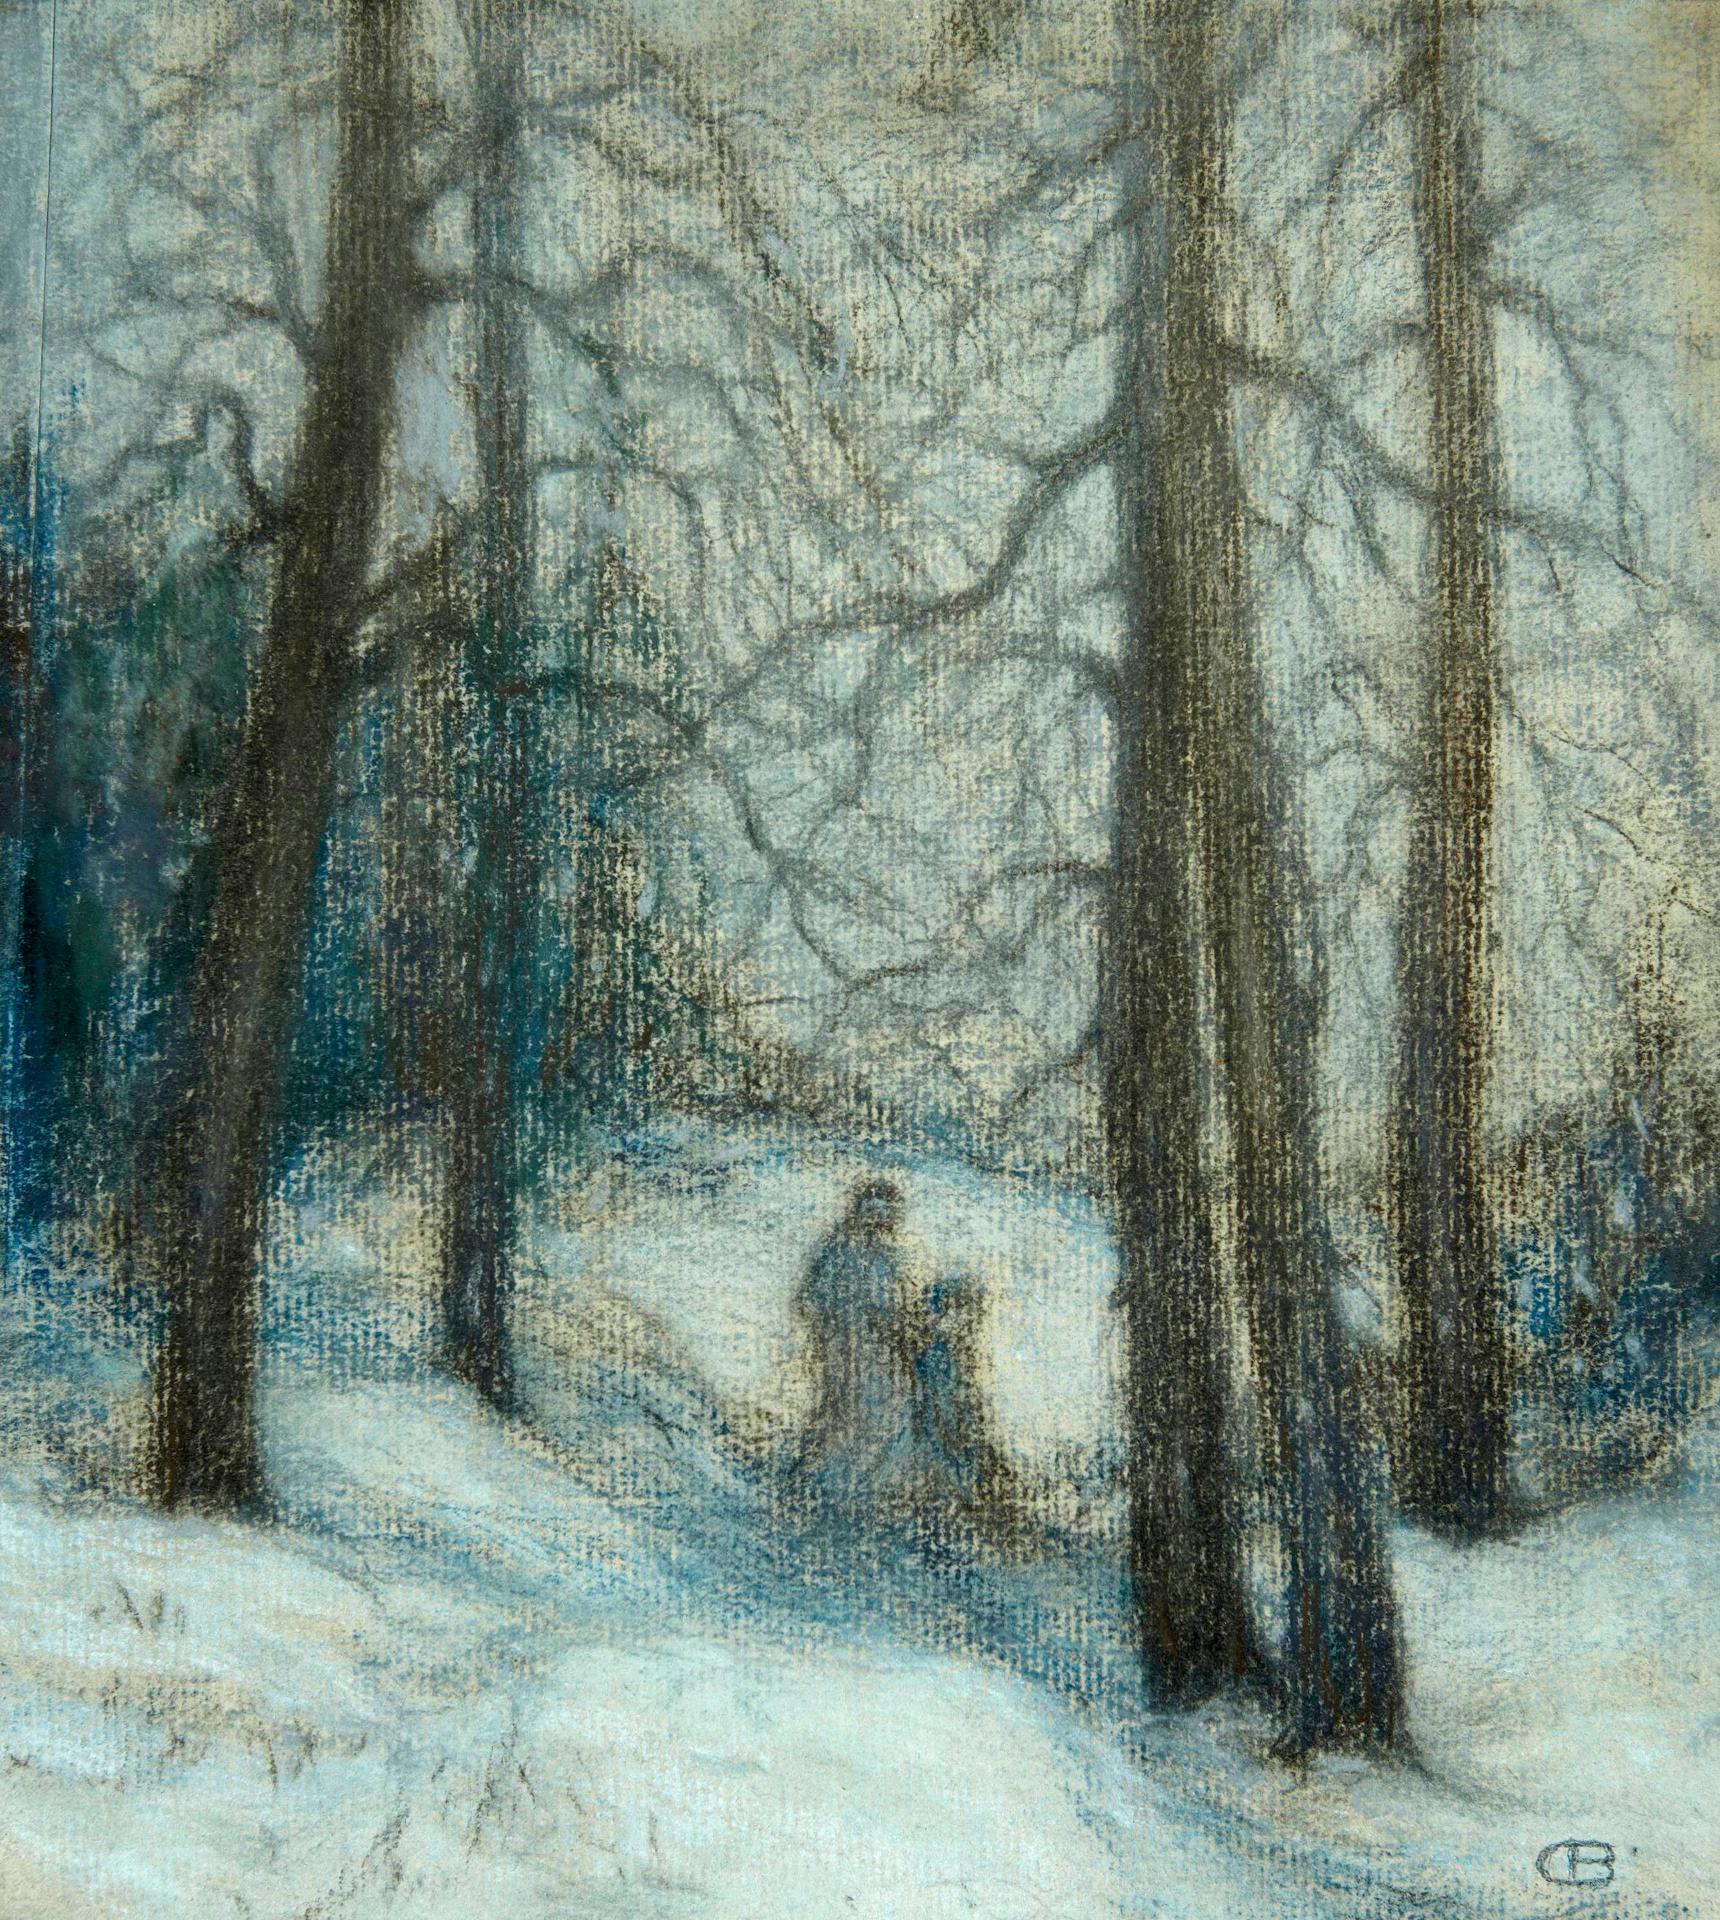 Charles Ernest de Belle (1873-1939) - Coming home at twilight, winter